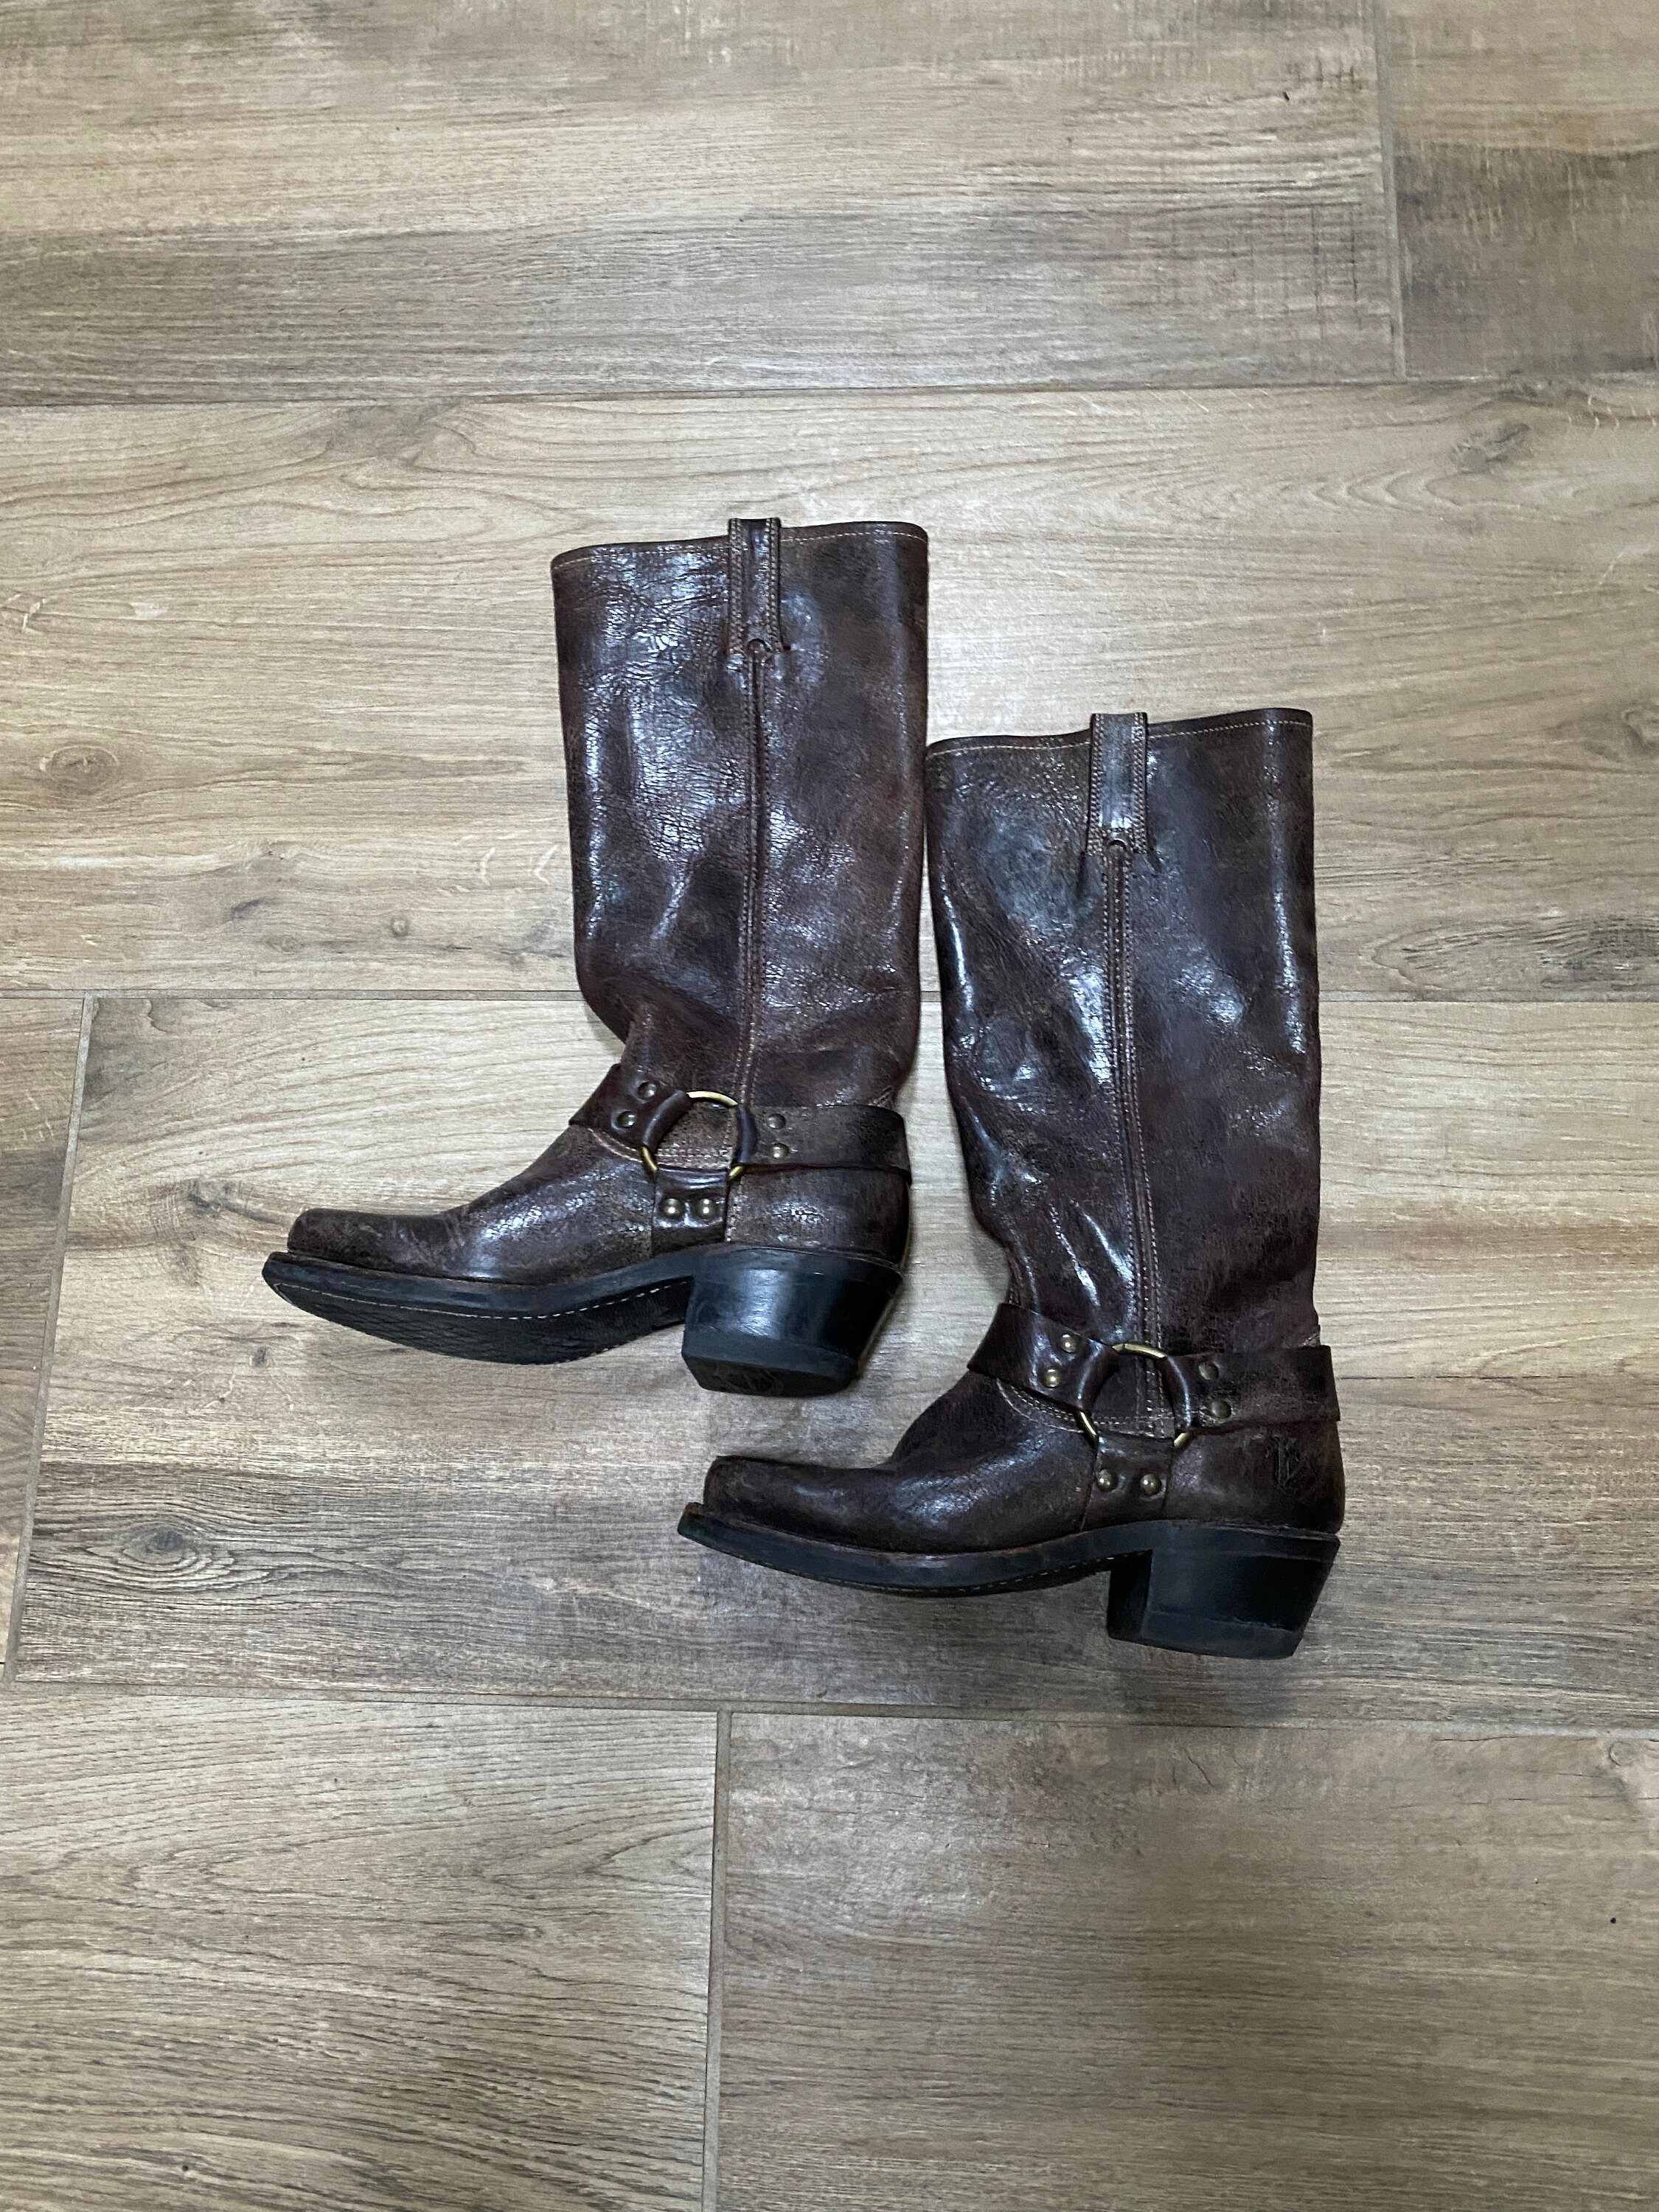 Spurs Boots and Braids - Wood Grain Rustic Artwork - Cowboy Boots